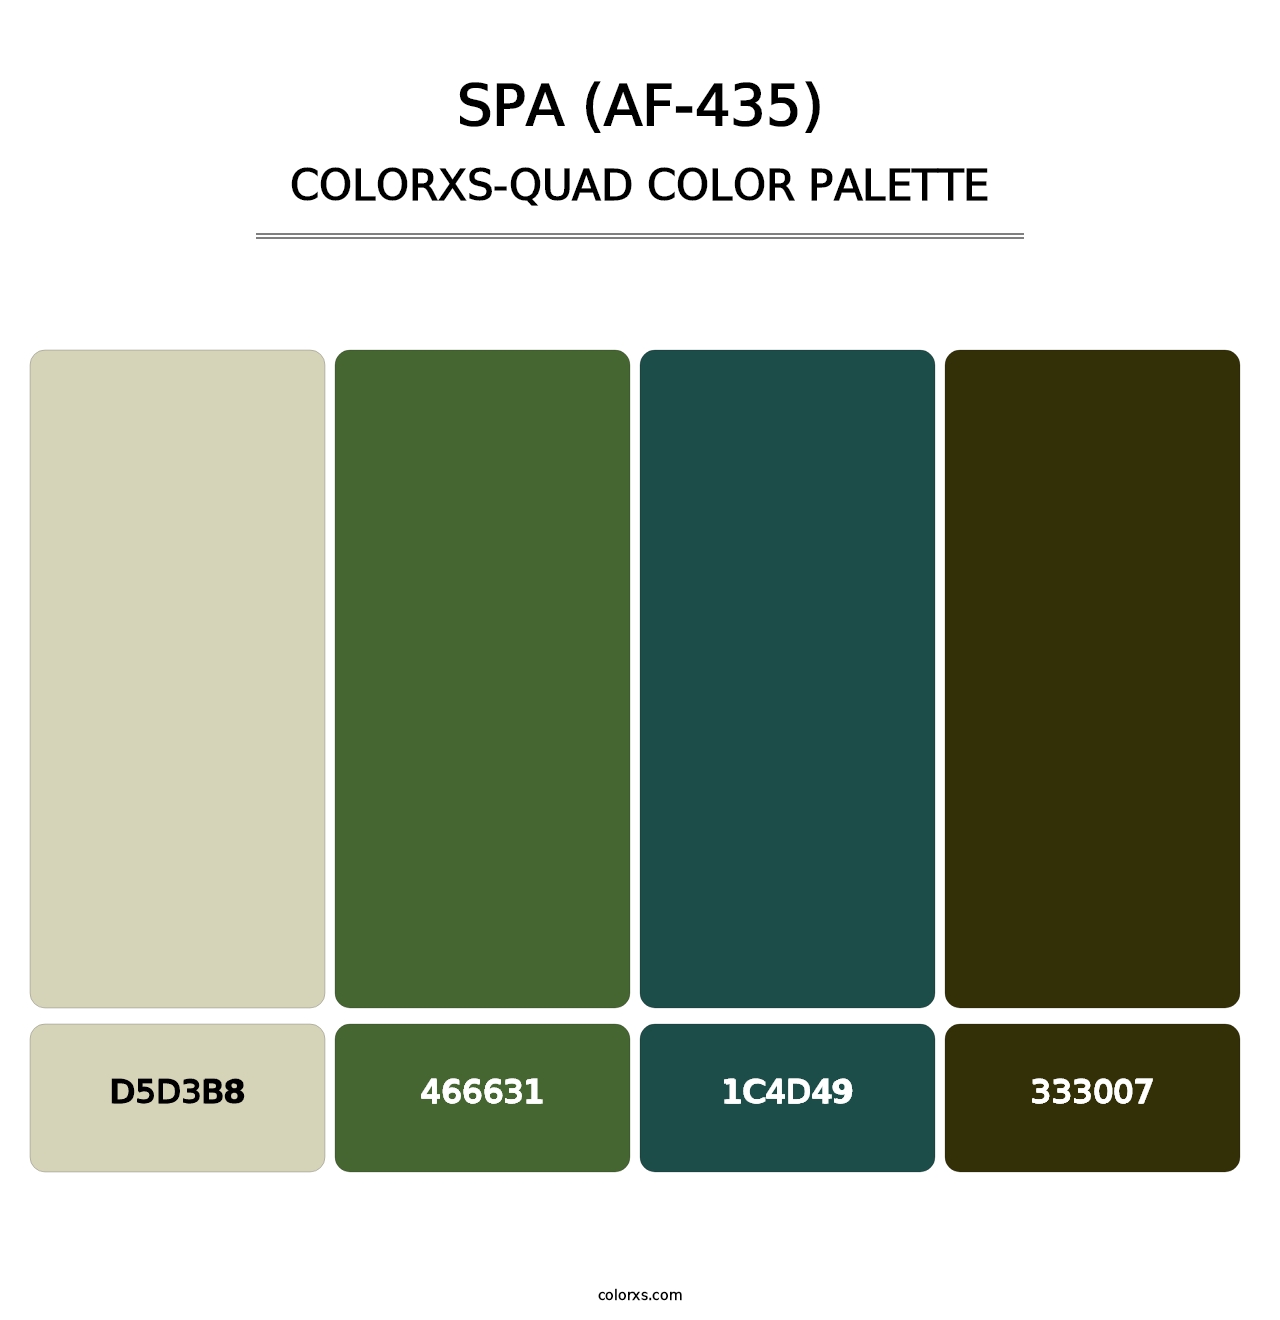 Spa (AF-435) - Colorxs Quad Palette